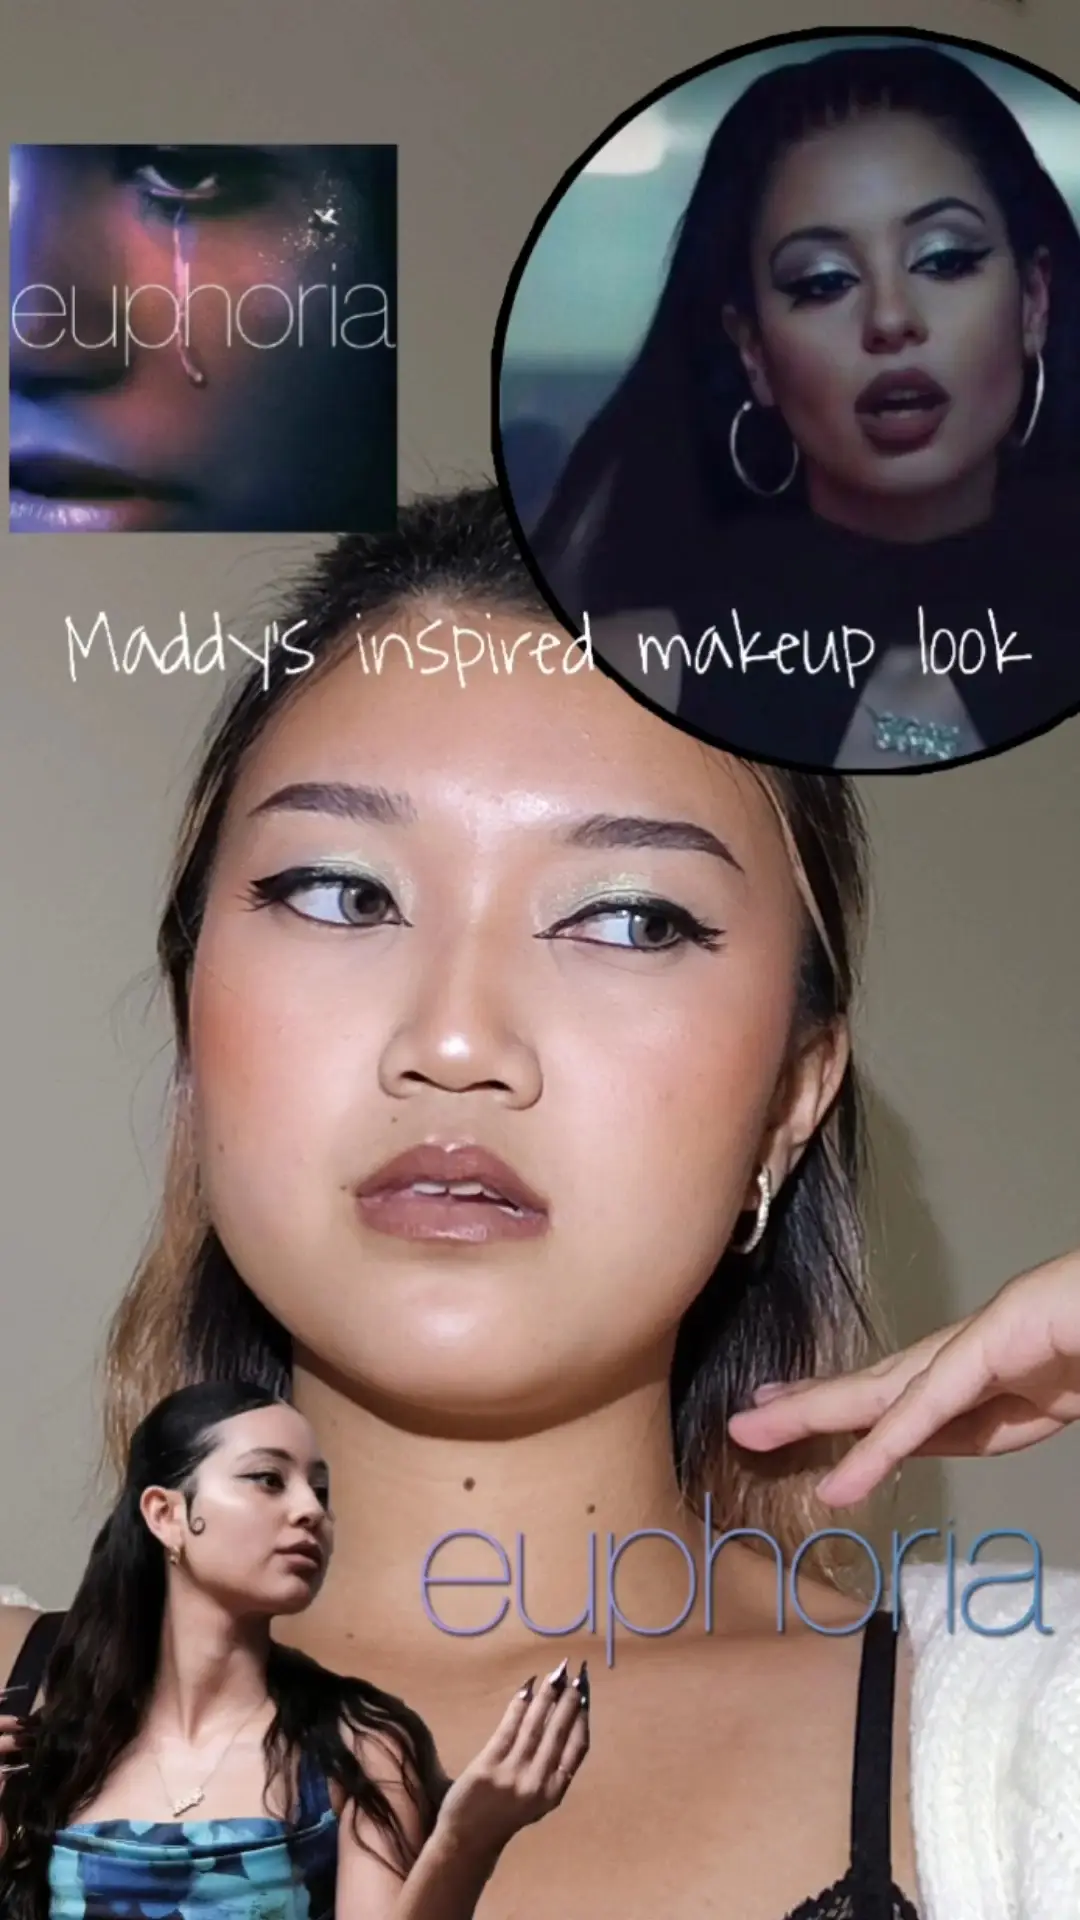 Maddy's Euphoria Makeup Looks